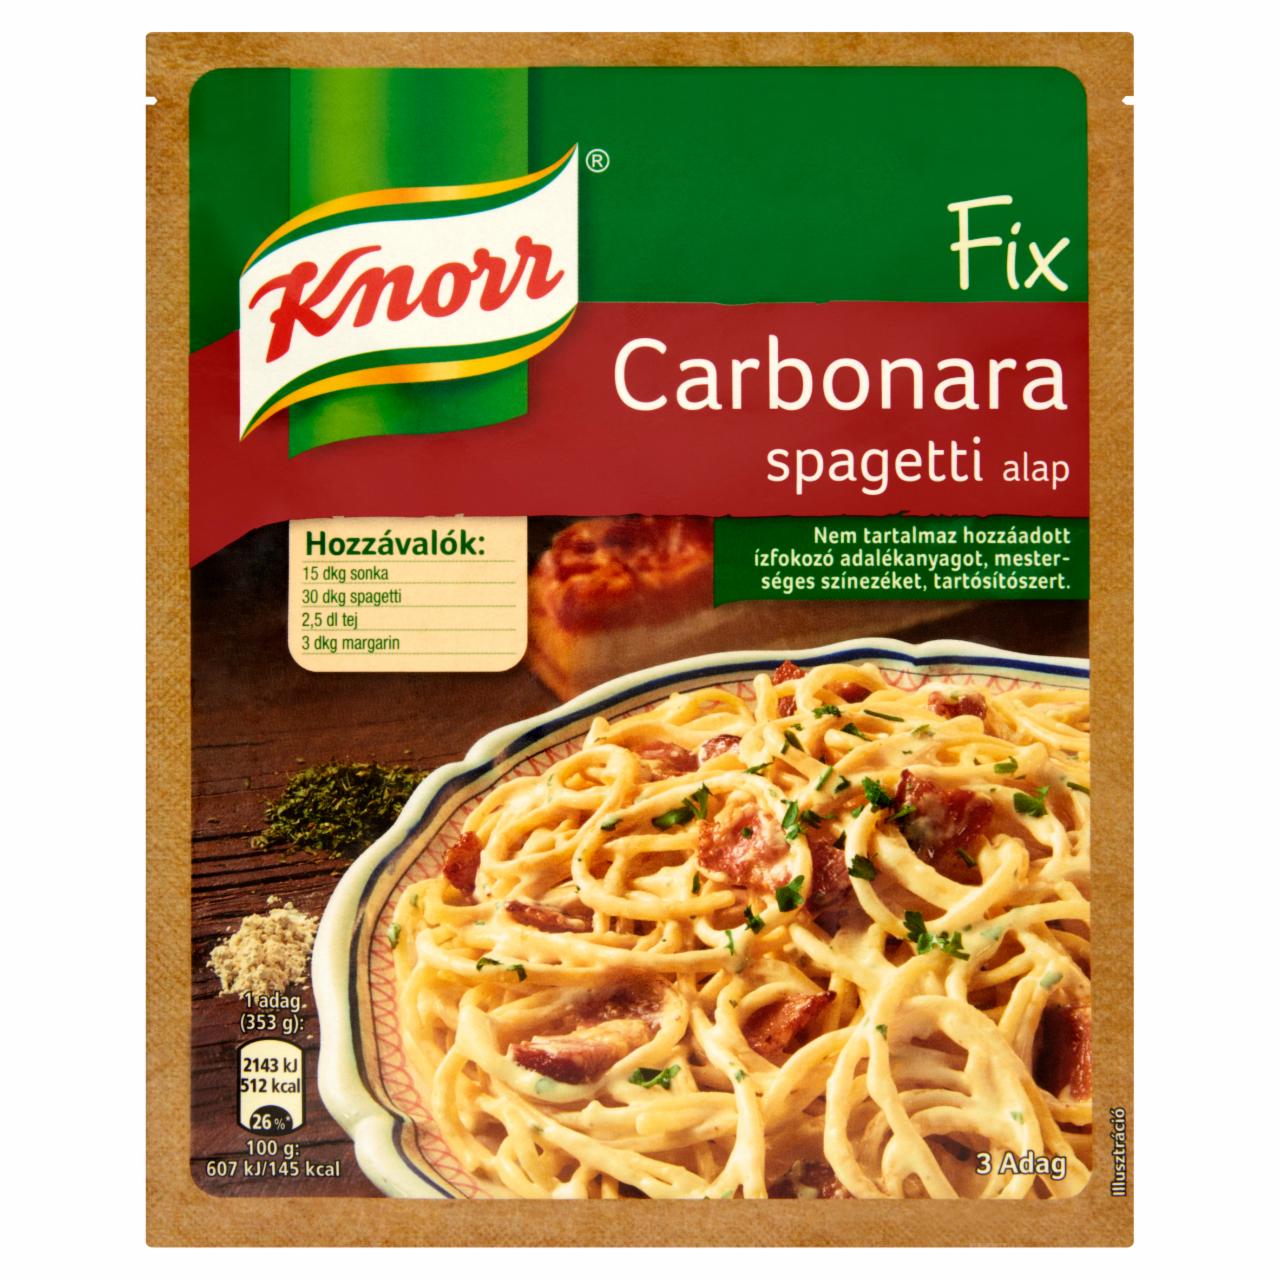 Képek - Knorr Fix carbonara spagetti alap 26 g